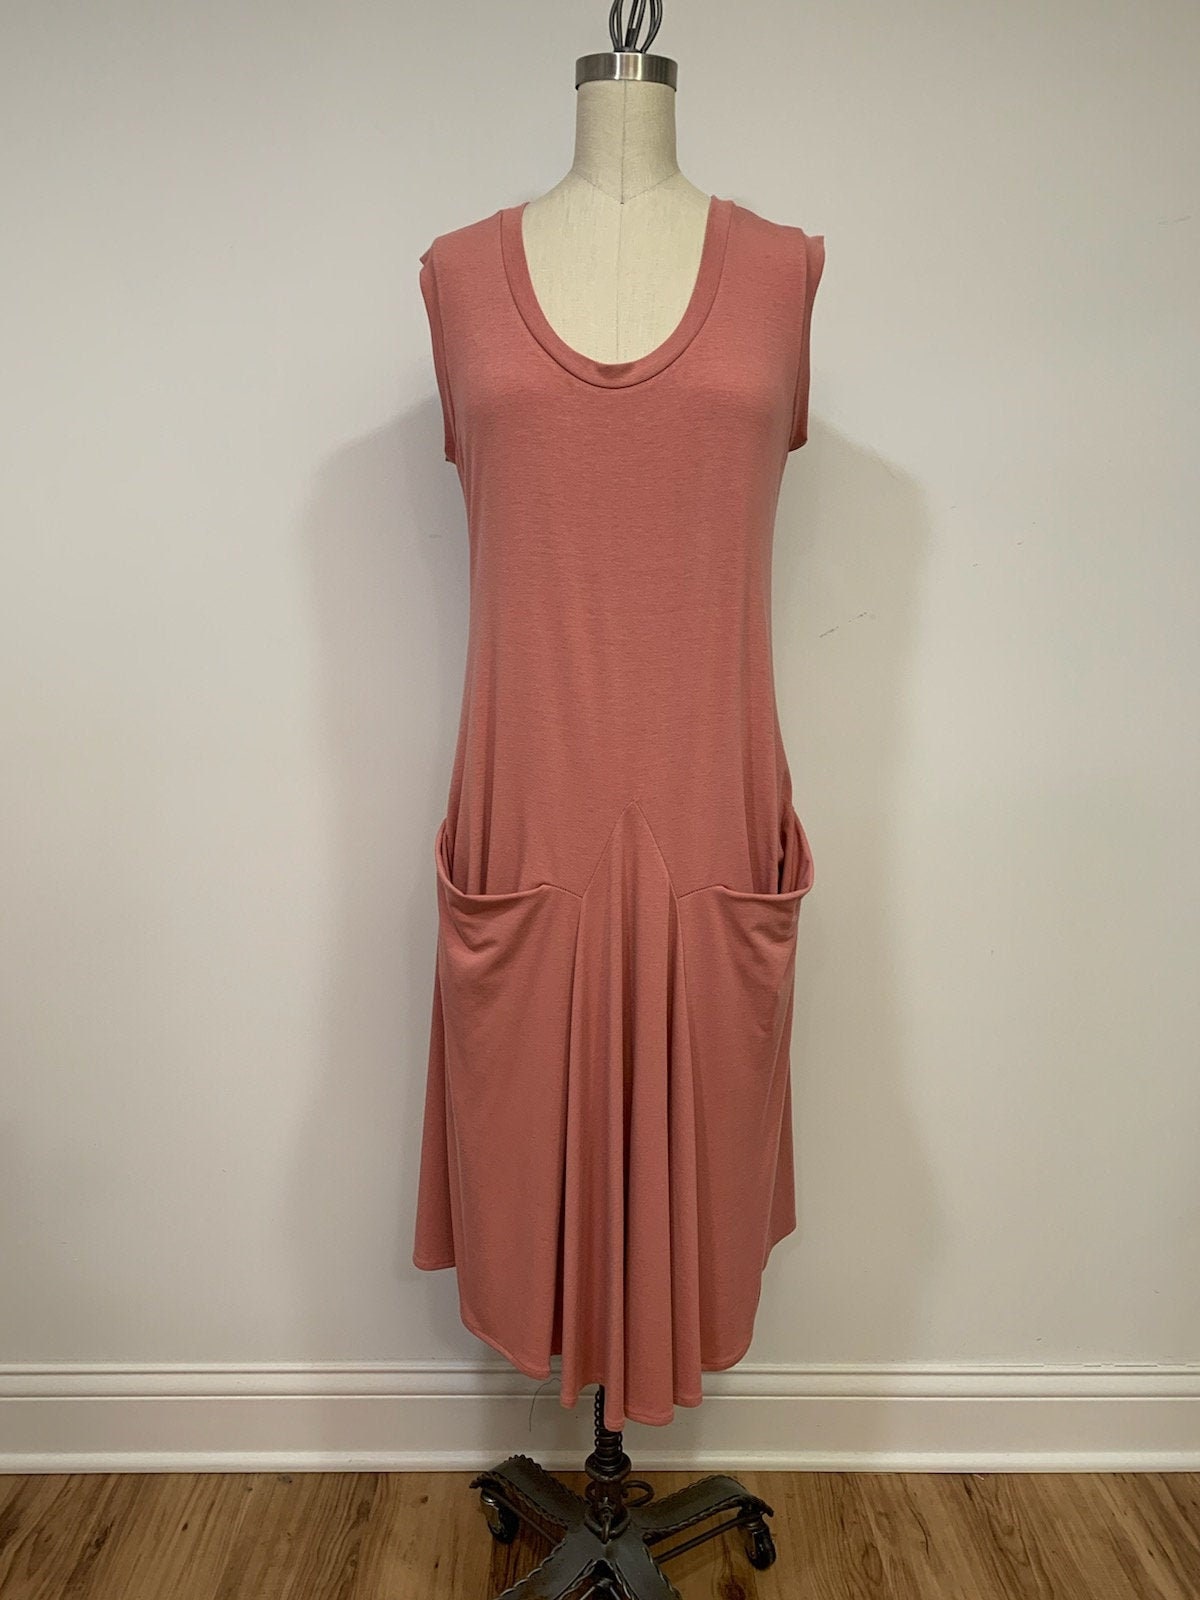 Asymmetric summer dress, knit fabric dress, pink dress, large pockets ...